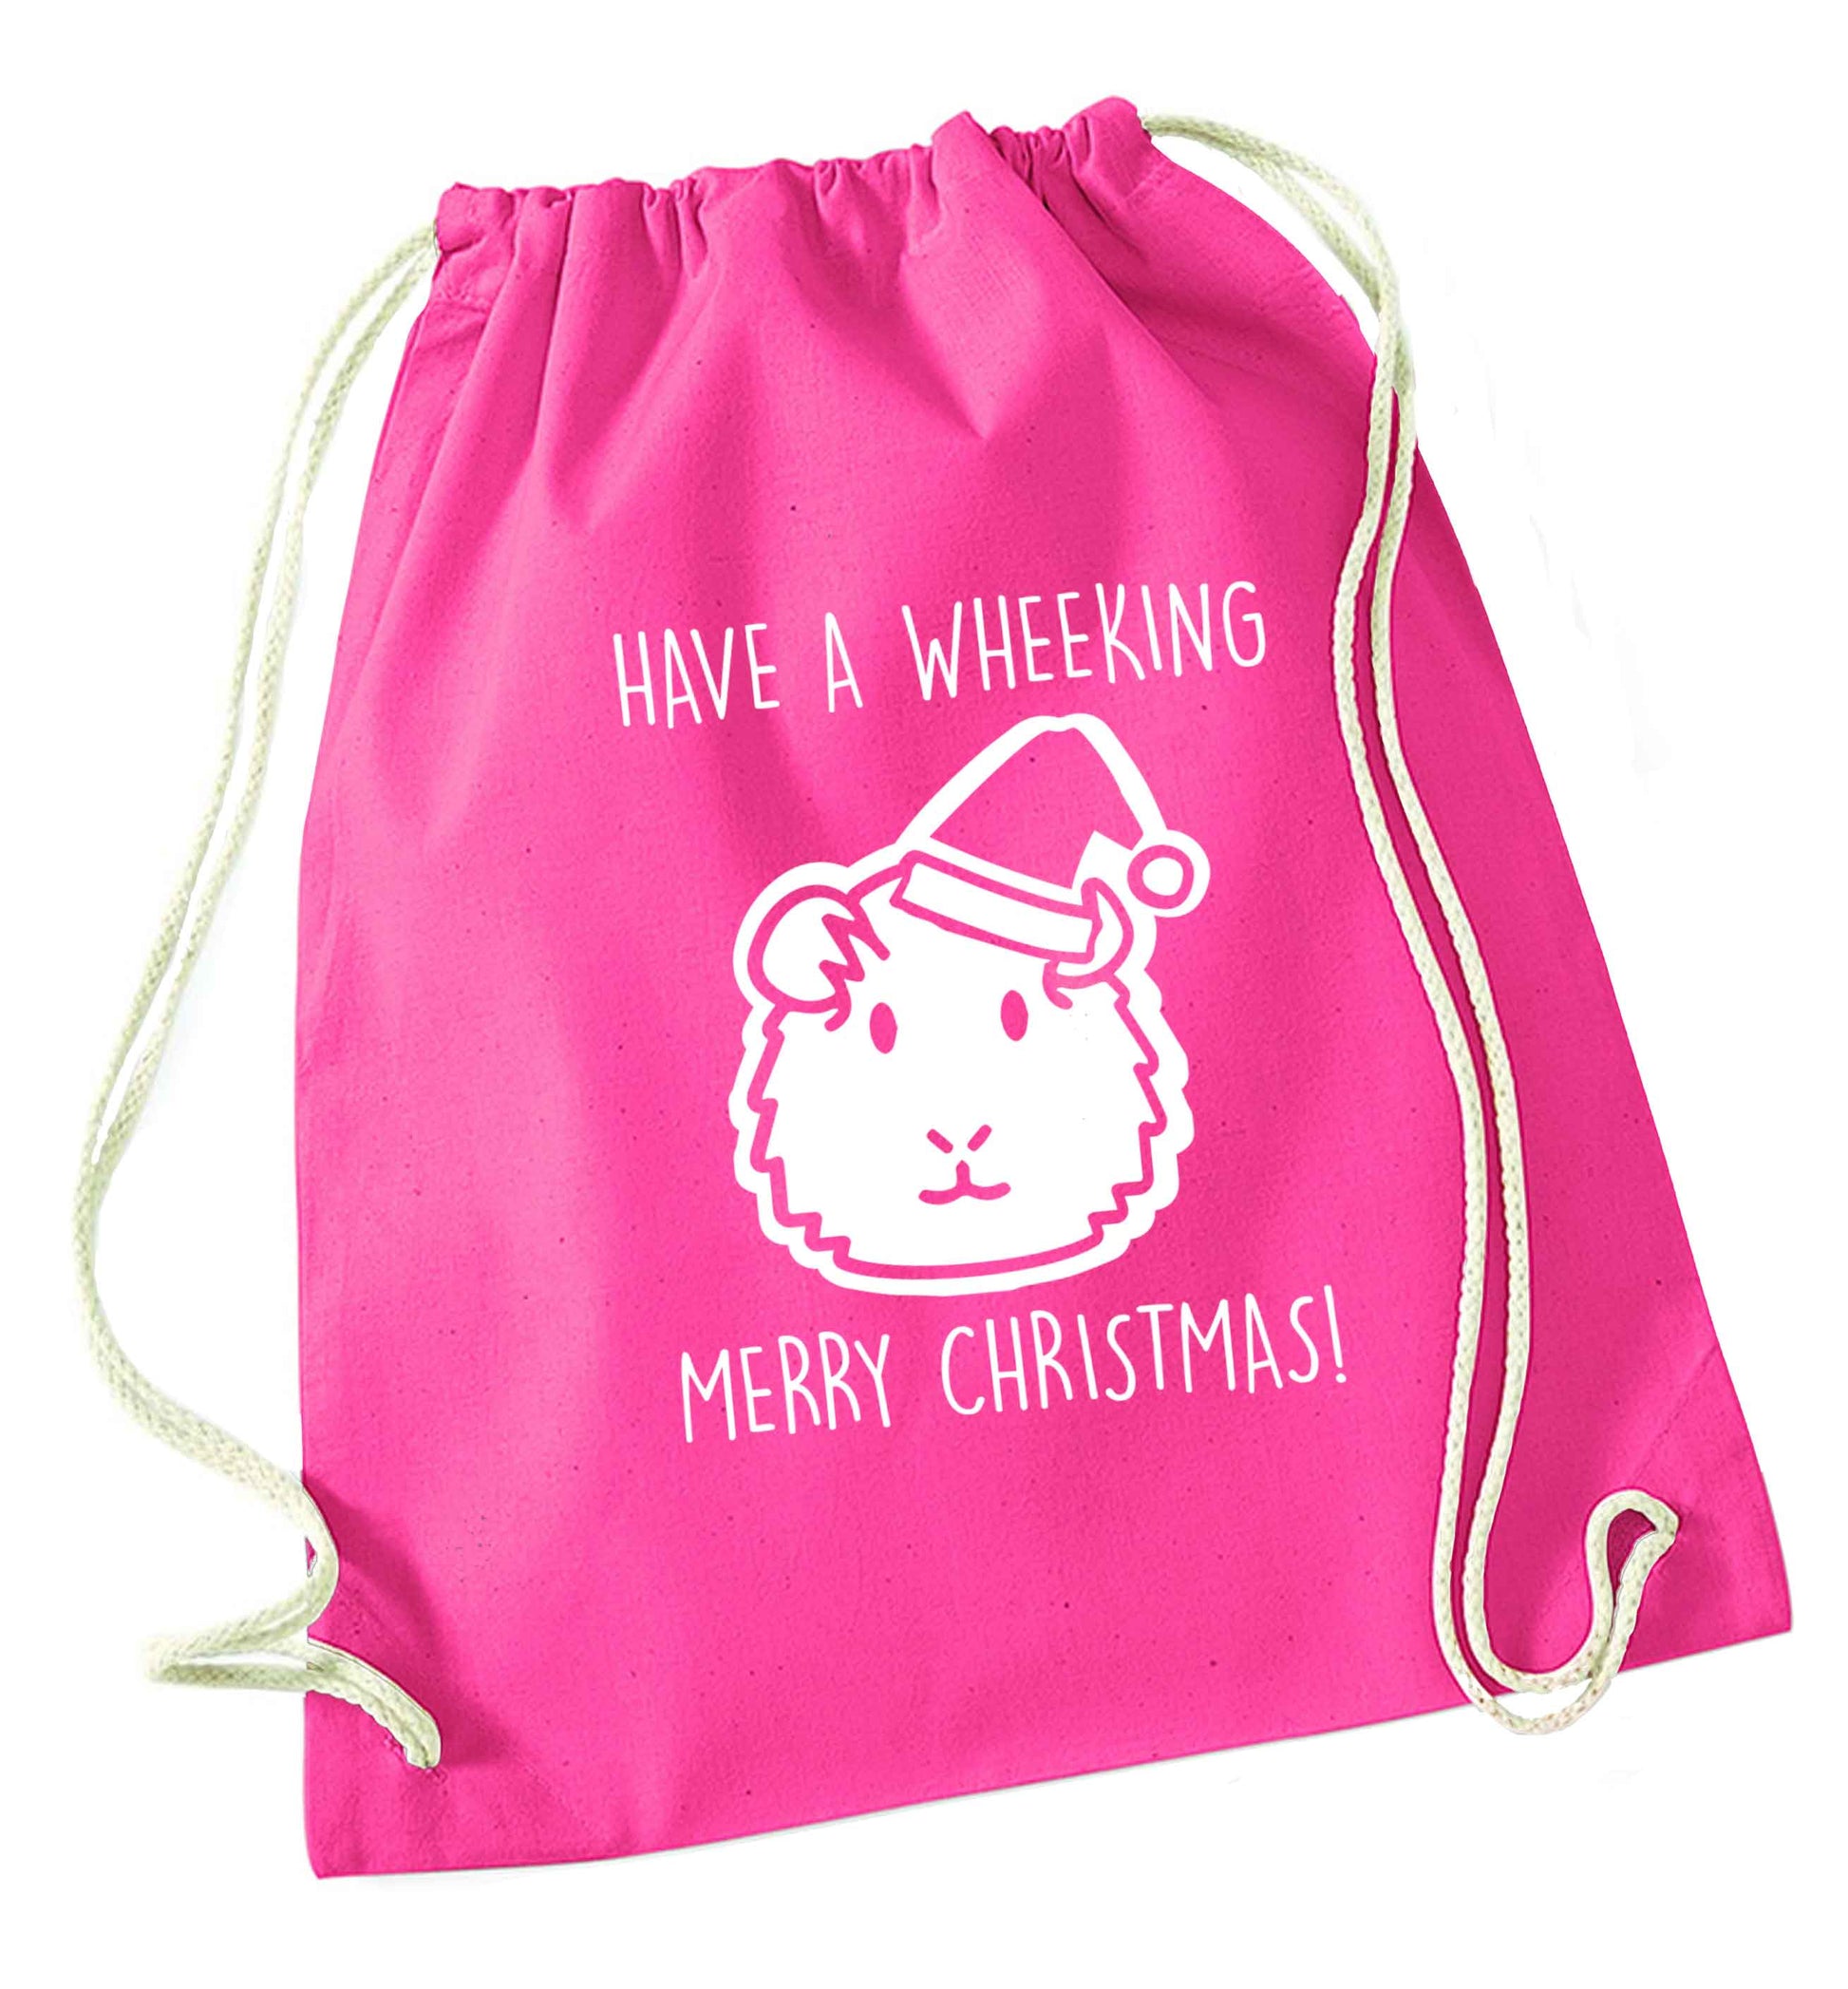 Have a wheeking merry Christmas pink drawstring bag